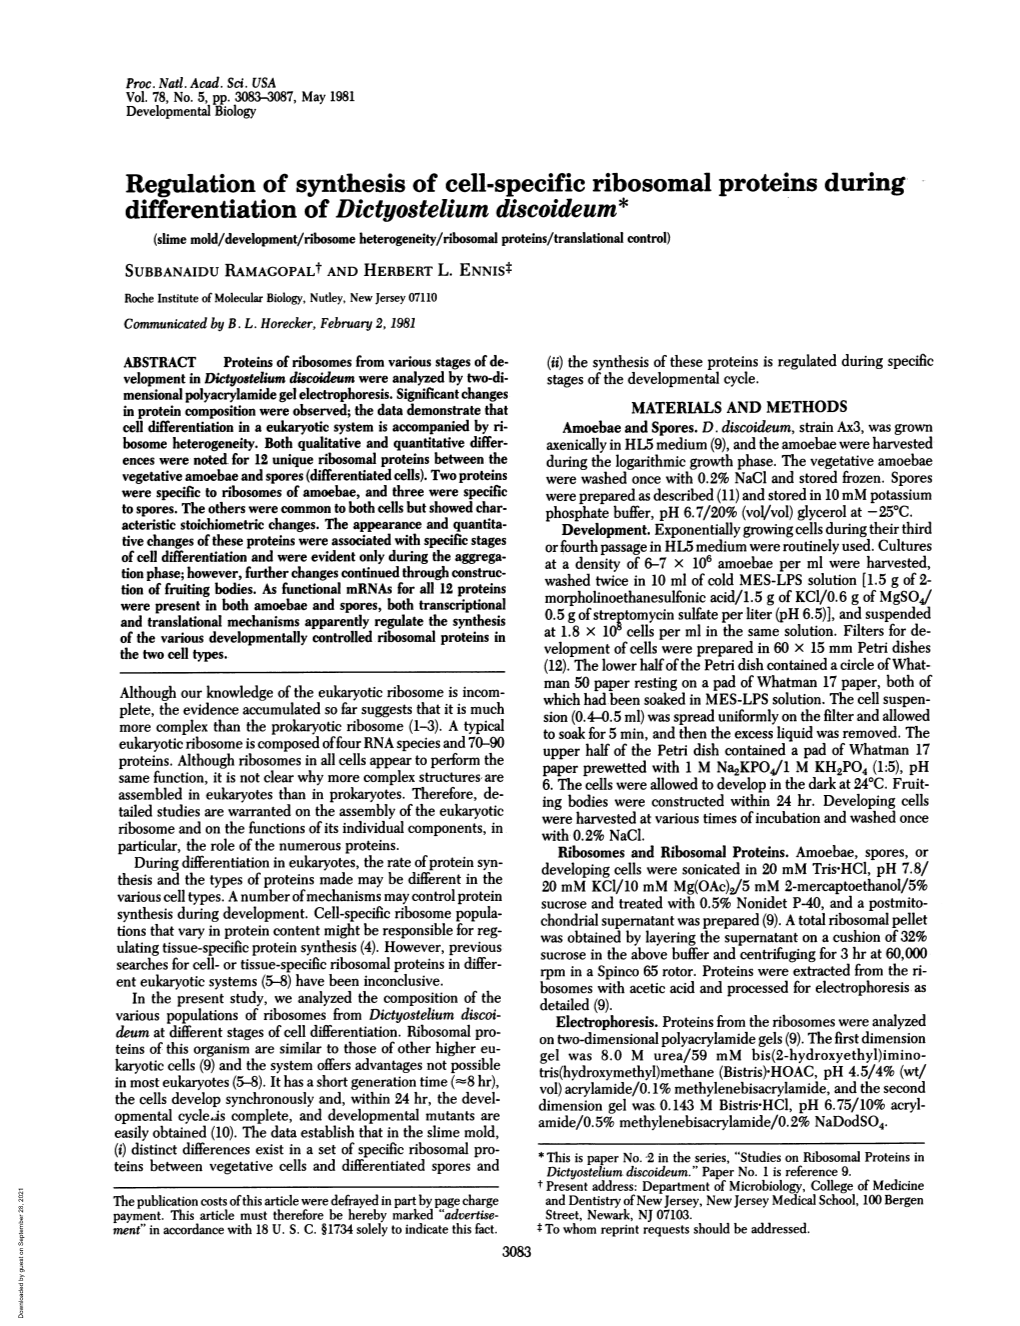 Differentiation of Dictyostelium Discoideum* (Slime Mold/Development/Ribosomei I Heterogeneity/Ribosomal Proteins/Translational Icontrol)